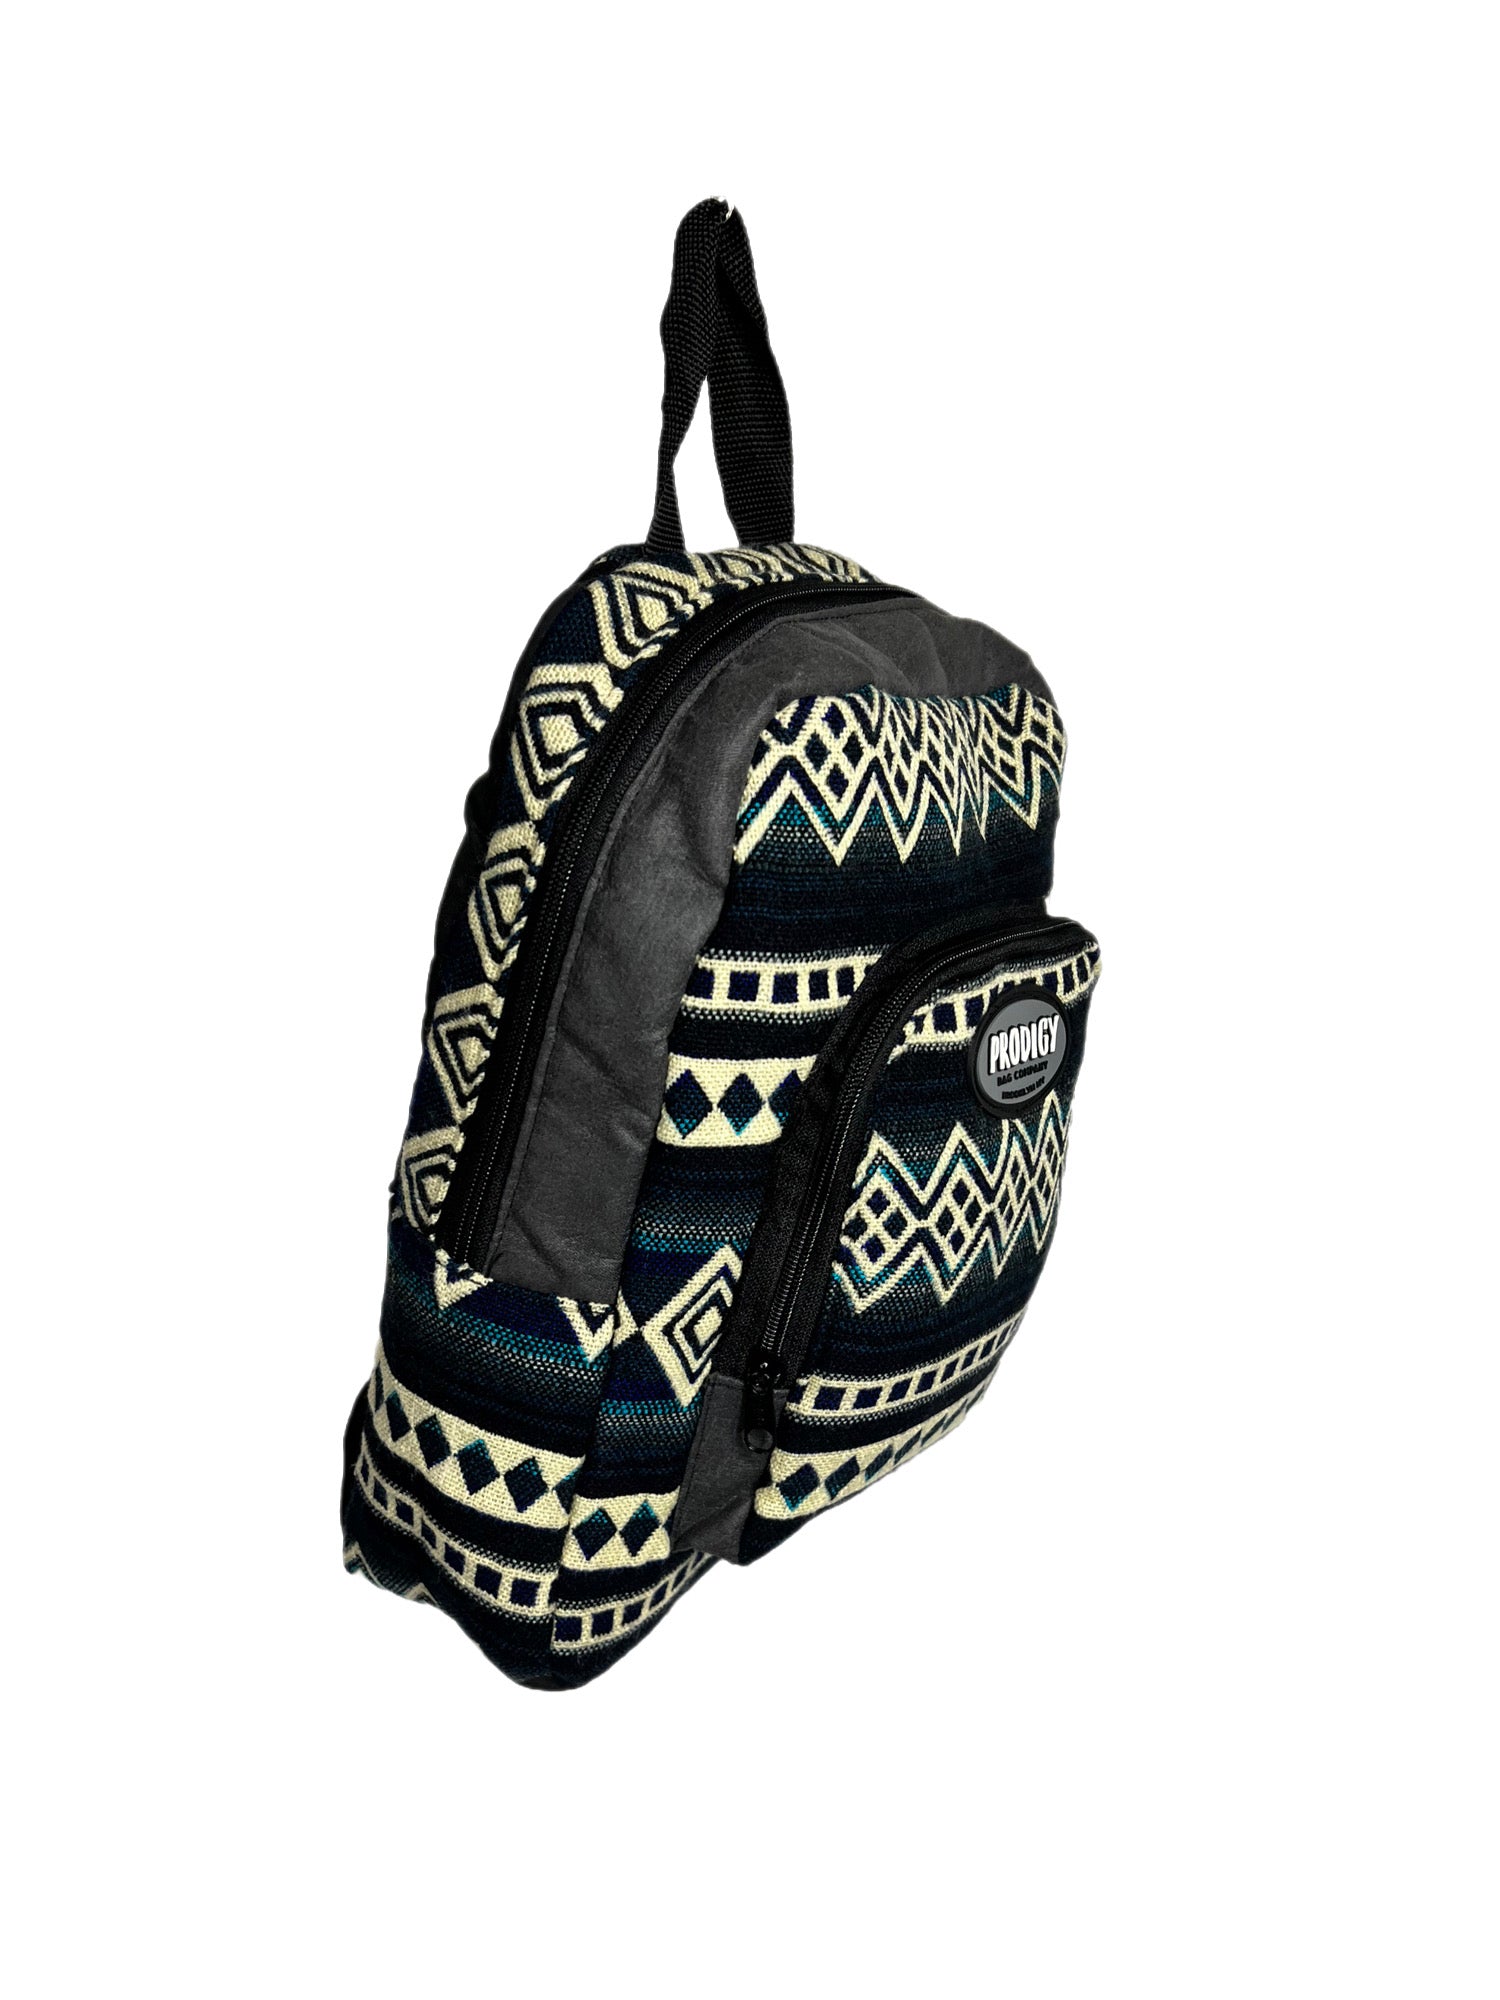 Zen Backpack - Prodigy Bag Company